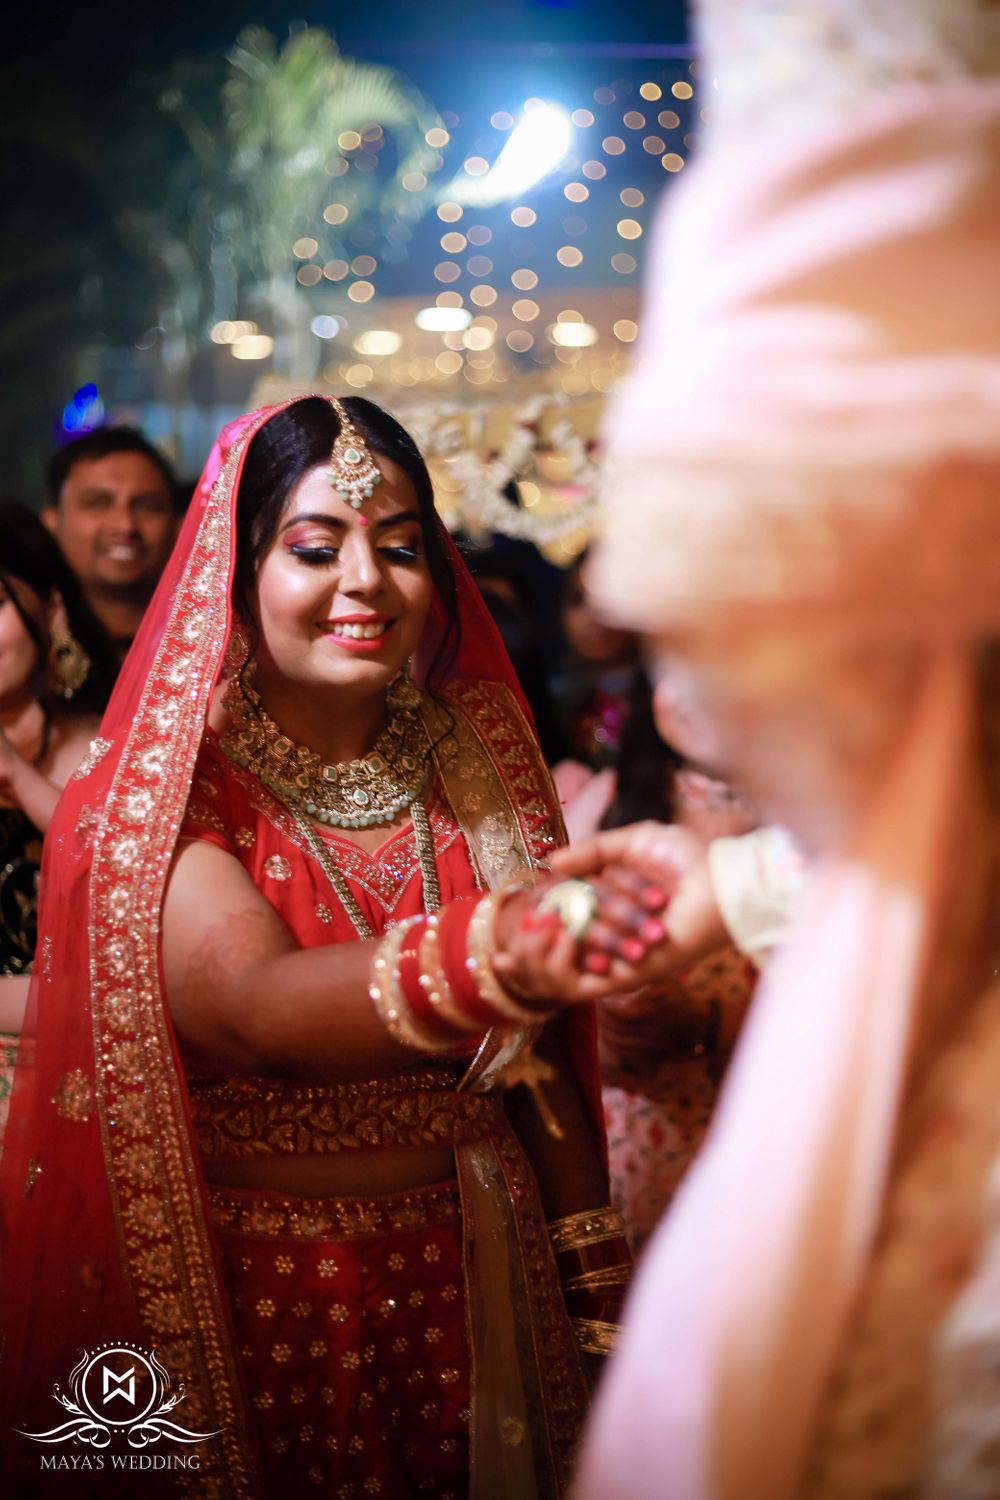 Photo From Amit Kumar - By Maya's Wedding Photography